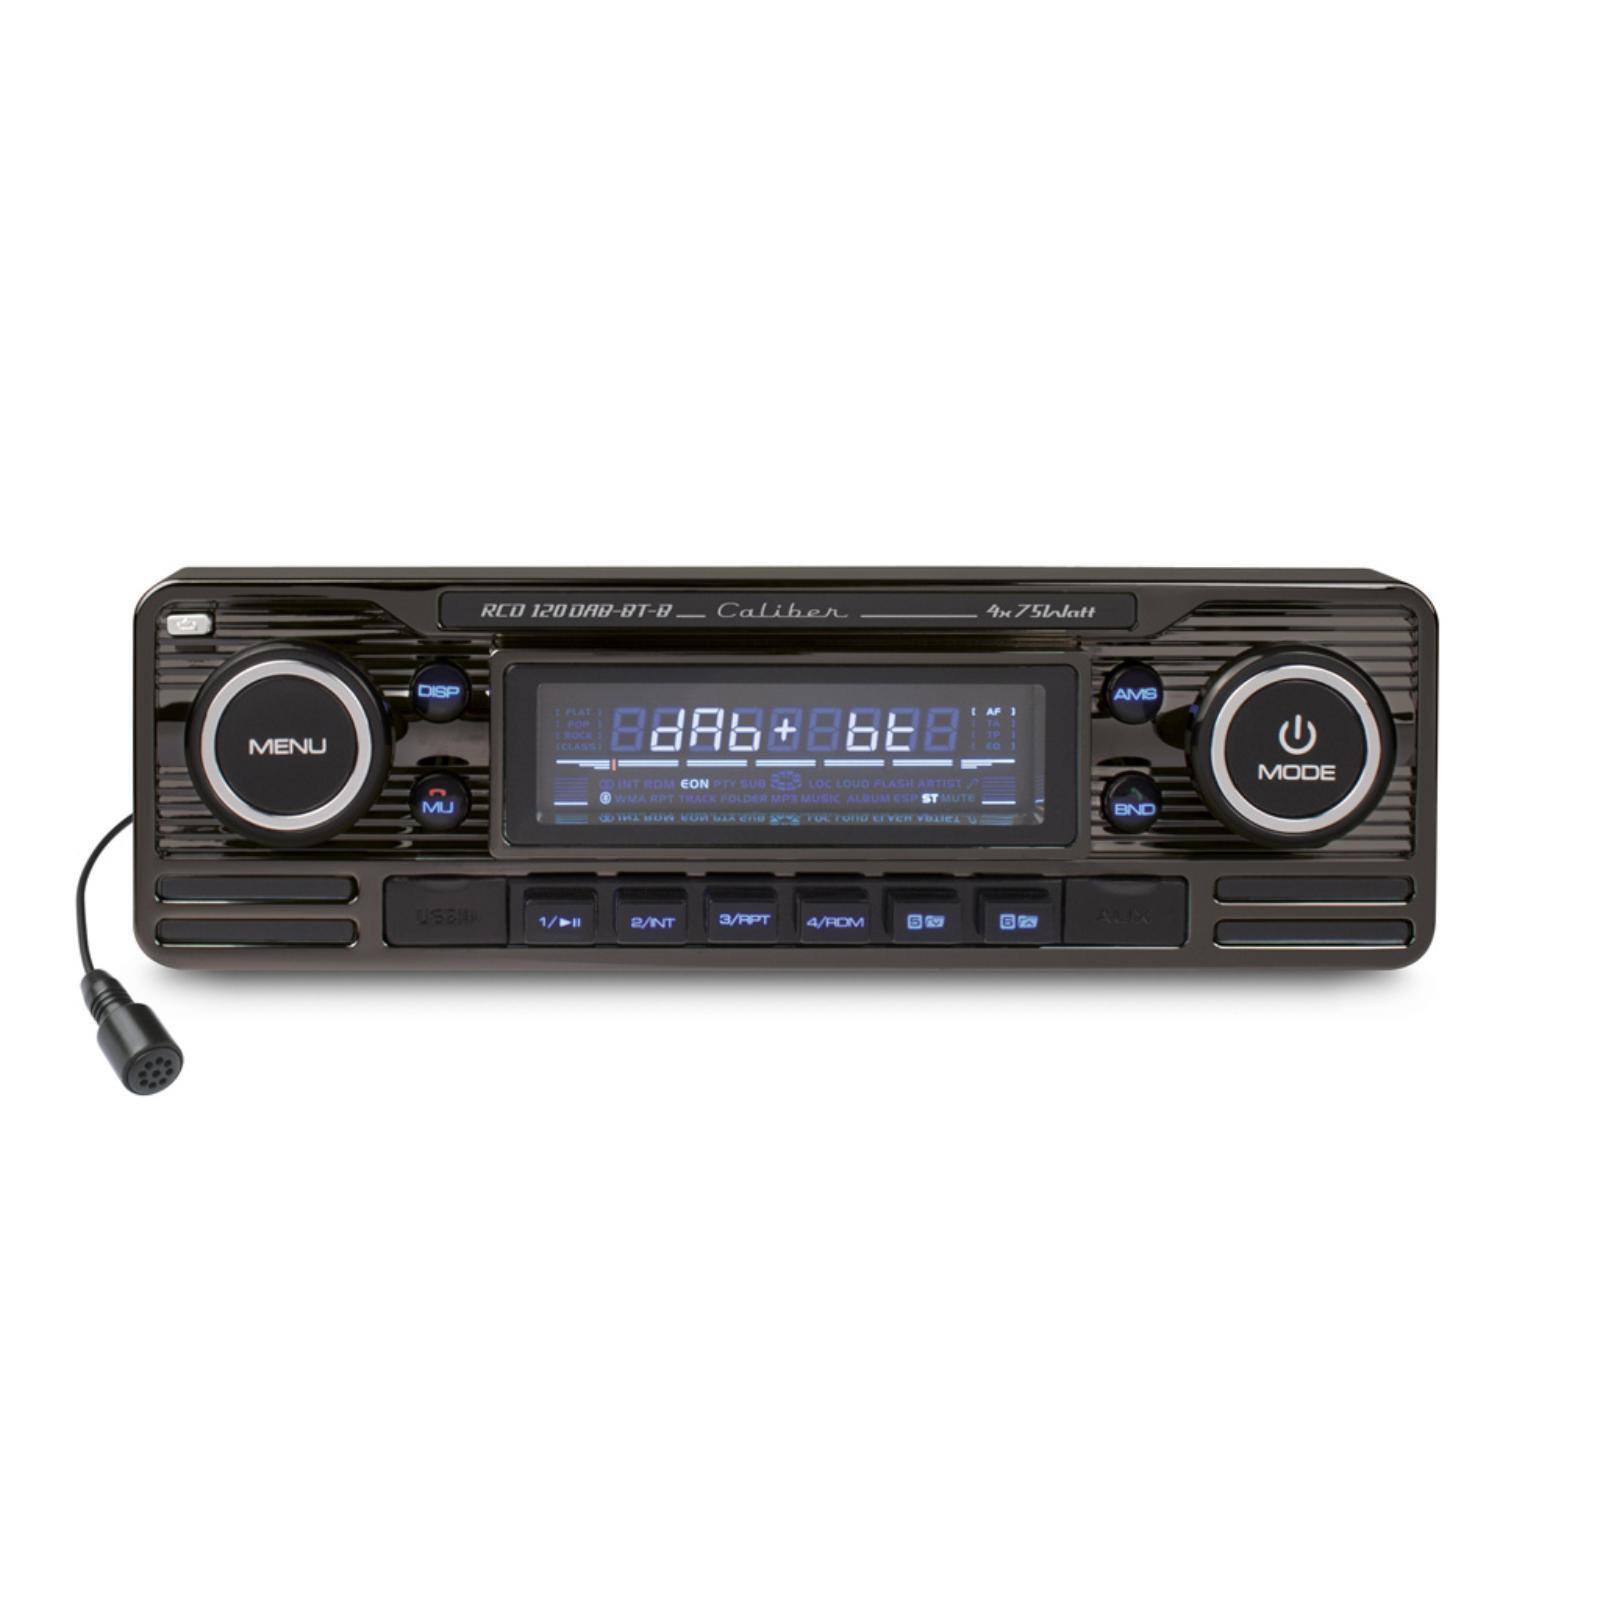 Caliber Retro CD Car Stereo, Black DAB Radio Bluetooth SD USB AUX